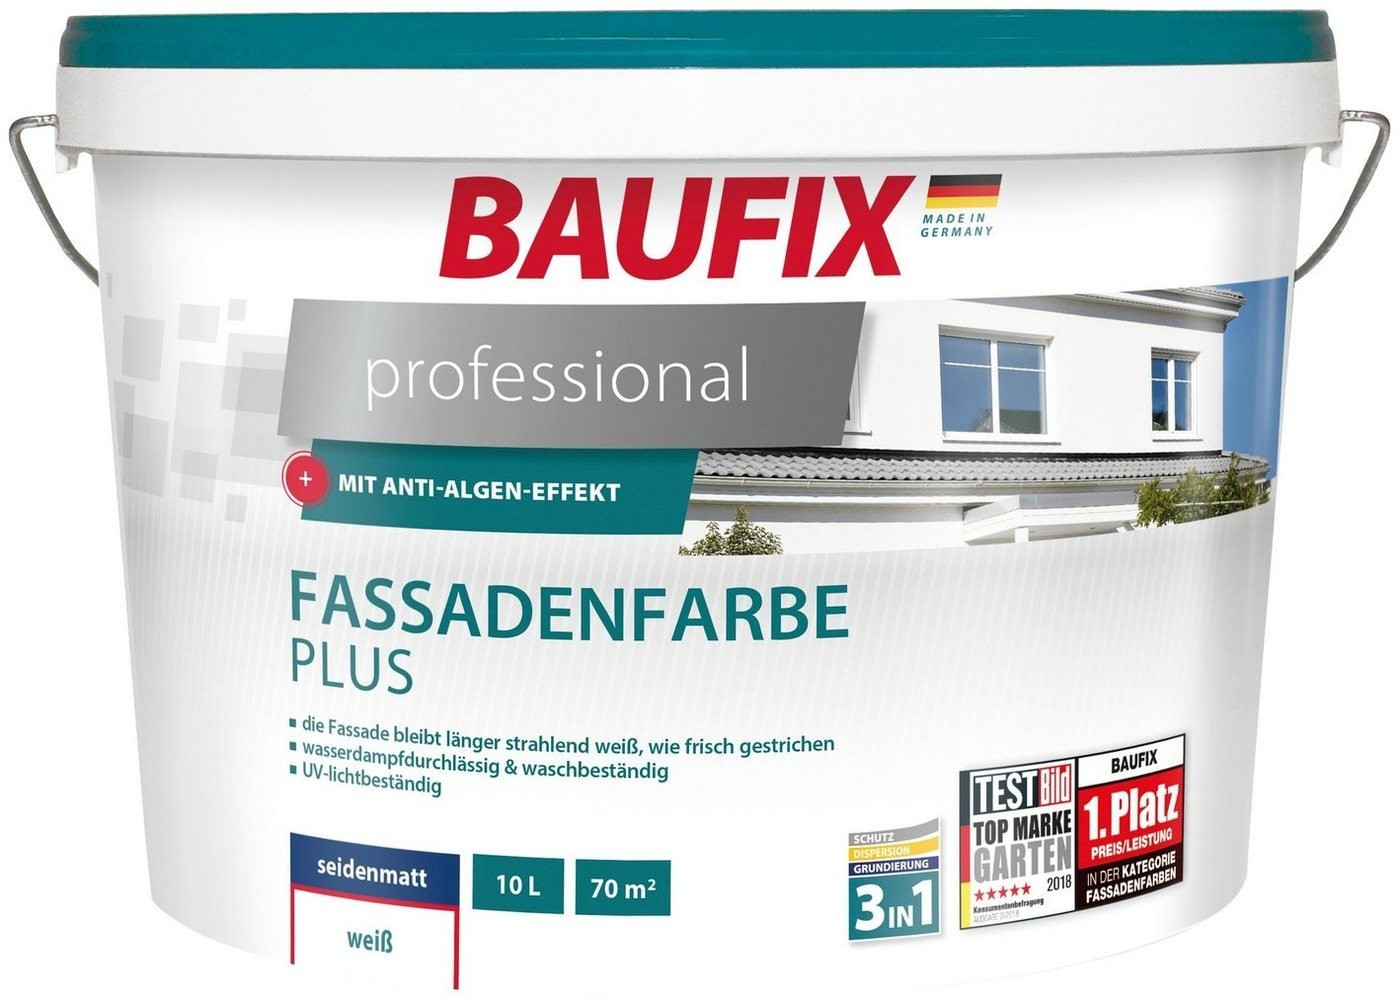 Baufix professional l 10 Preisvergleich bei Plus 37,99 Fassadenfarbe € ab 